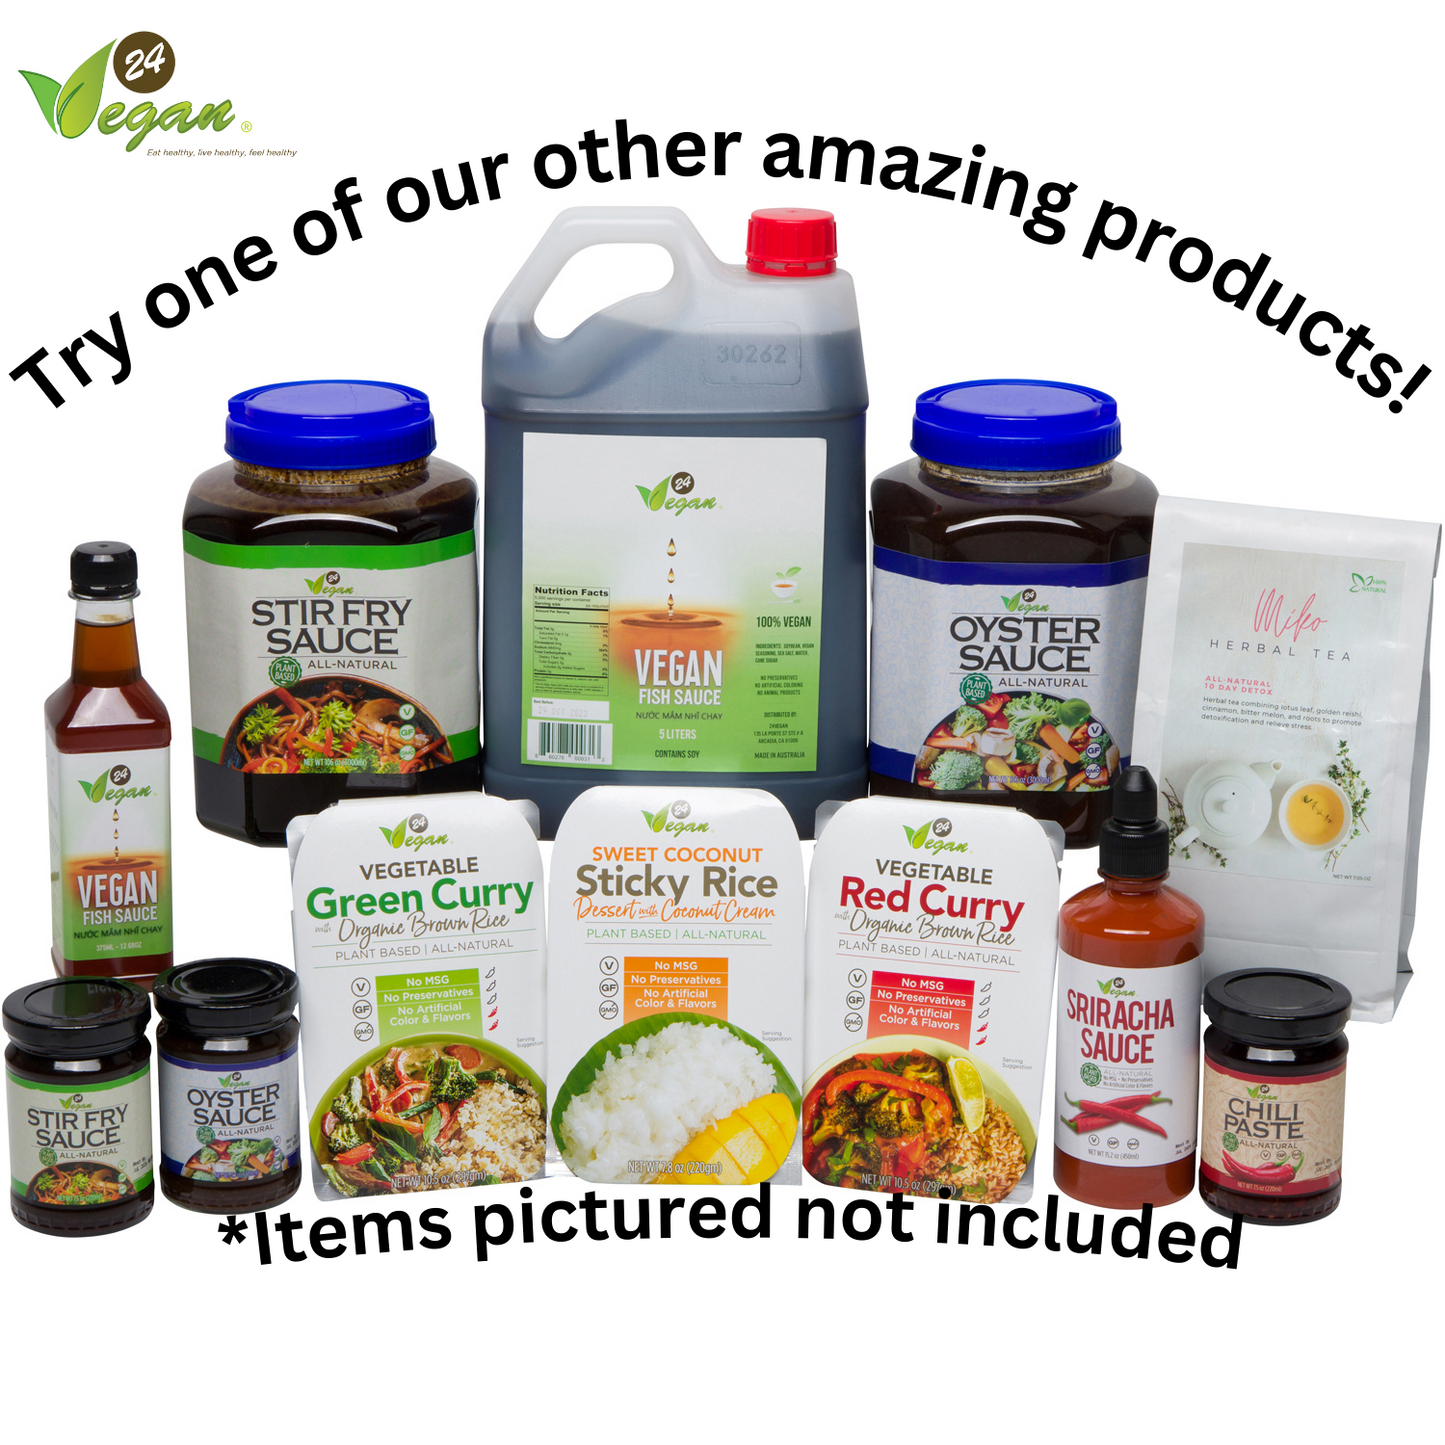 24Vegan Oyster Sauce - 3kg - All Natural - Vegan - MSG Free - NON GMO